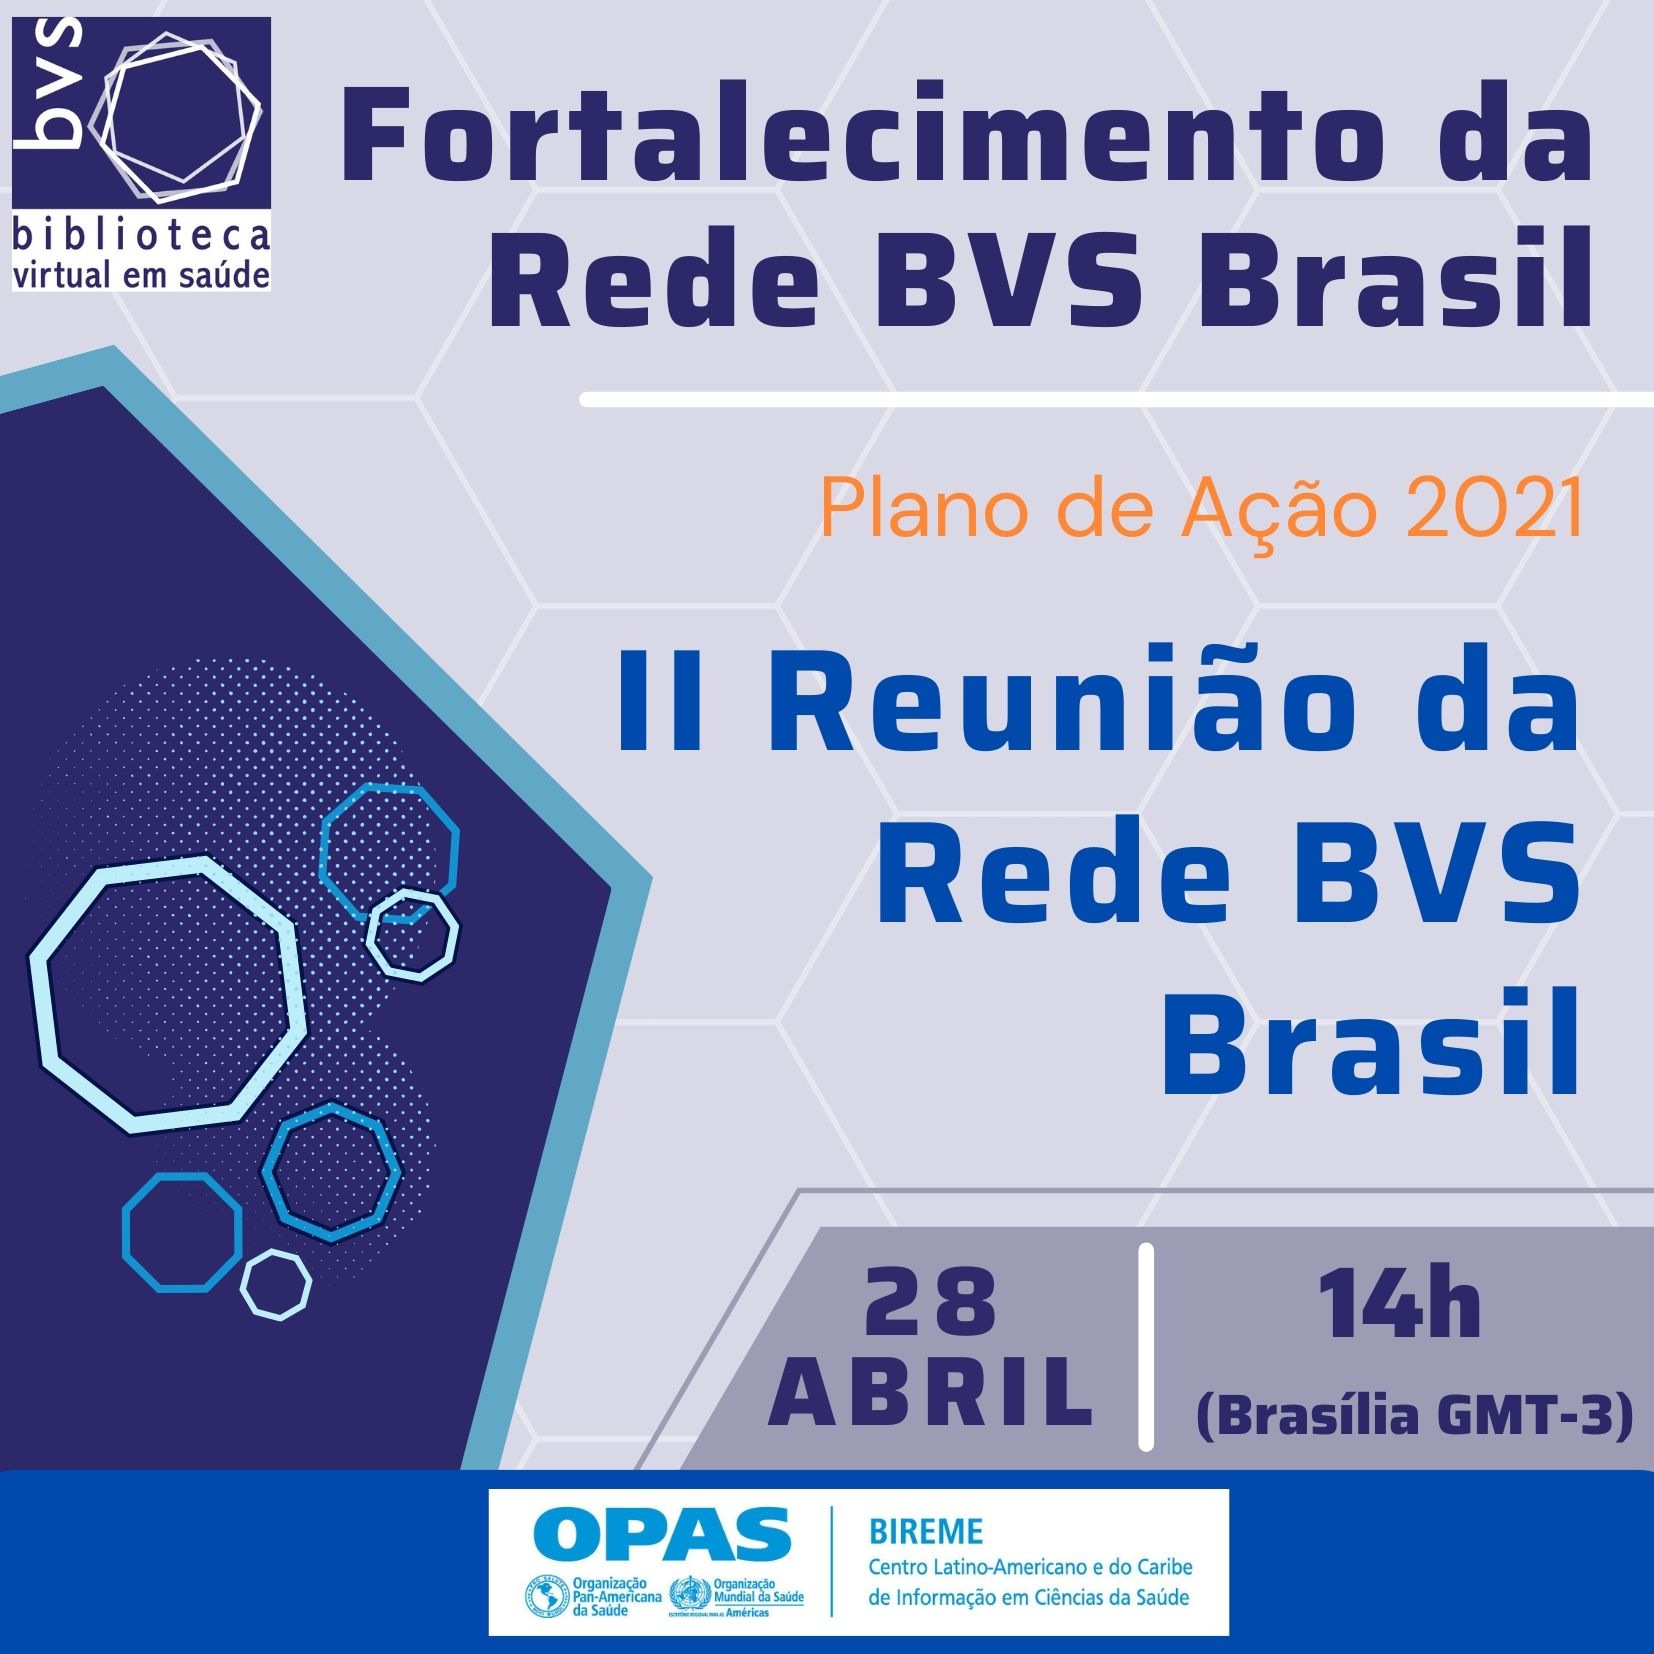 http://red.bvsalud.org/modelo-bvs/wp-content/uploads/sites/3/2021/03/Destaque-II-reuniao-Plano-acao-2021-Rede-BVS-Brasil.jpg